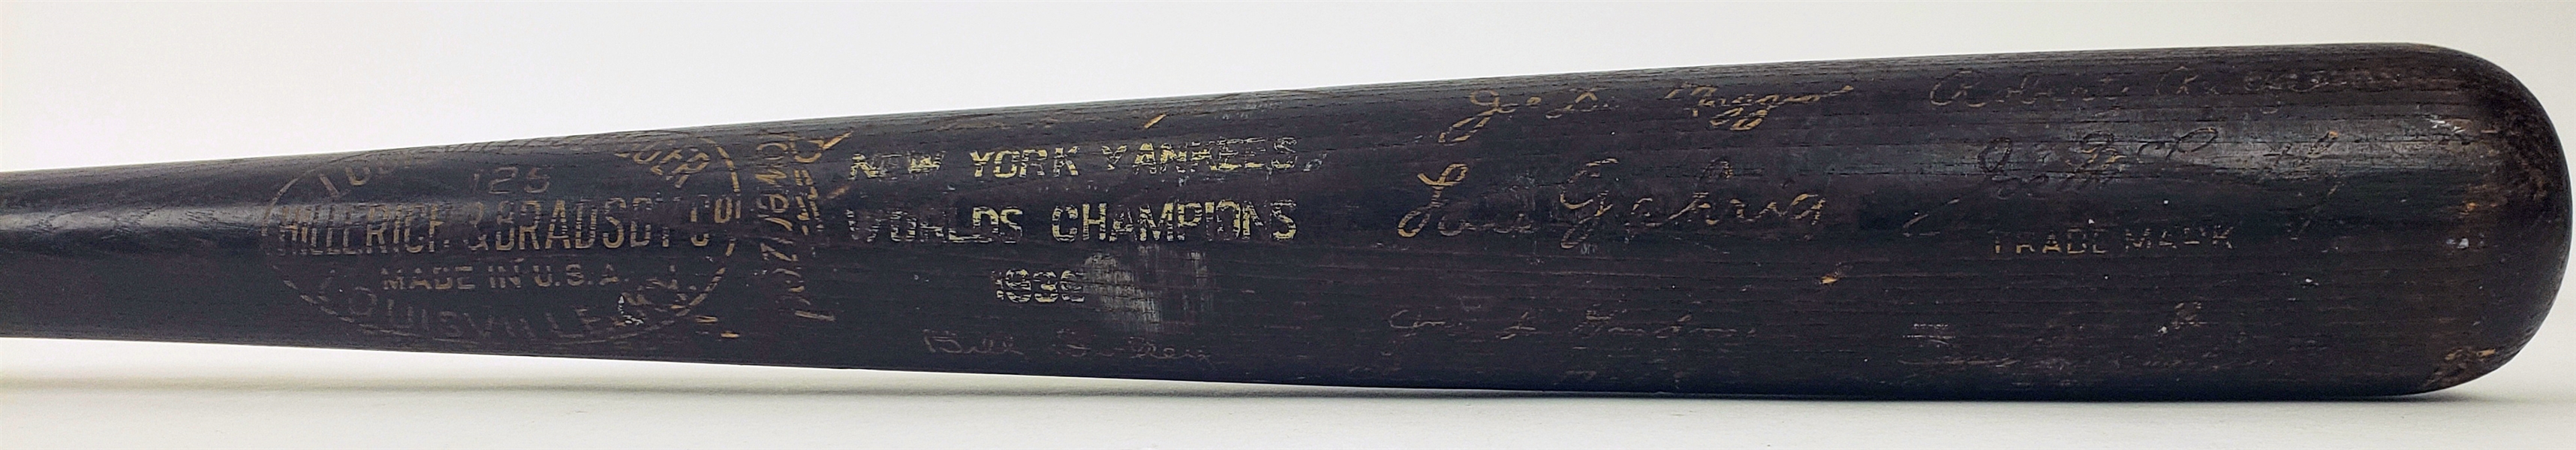 1938 New York Yankees World Series Black Bat